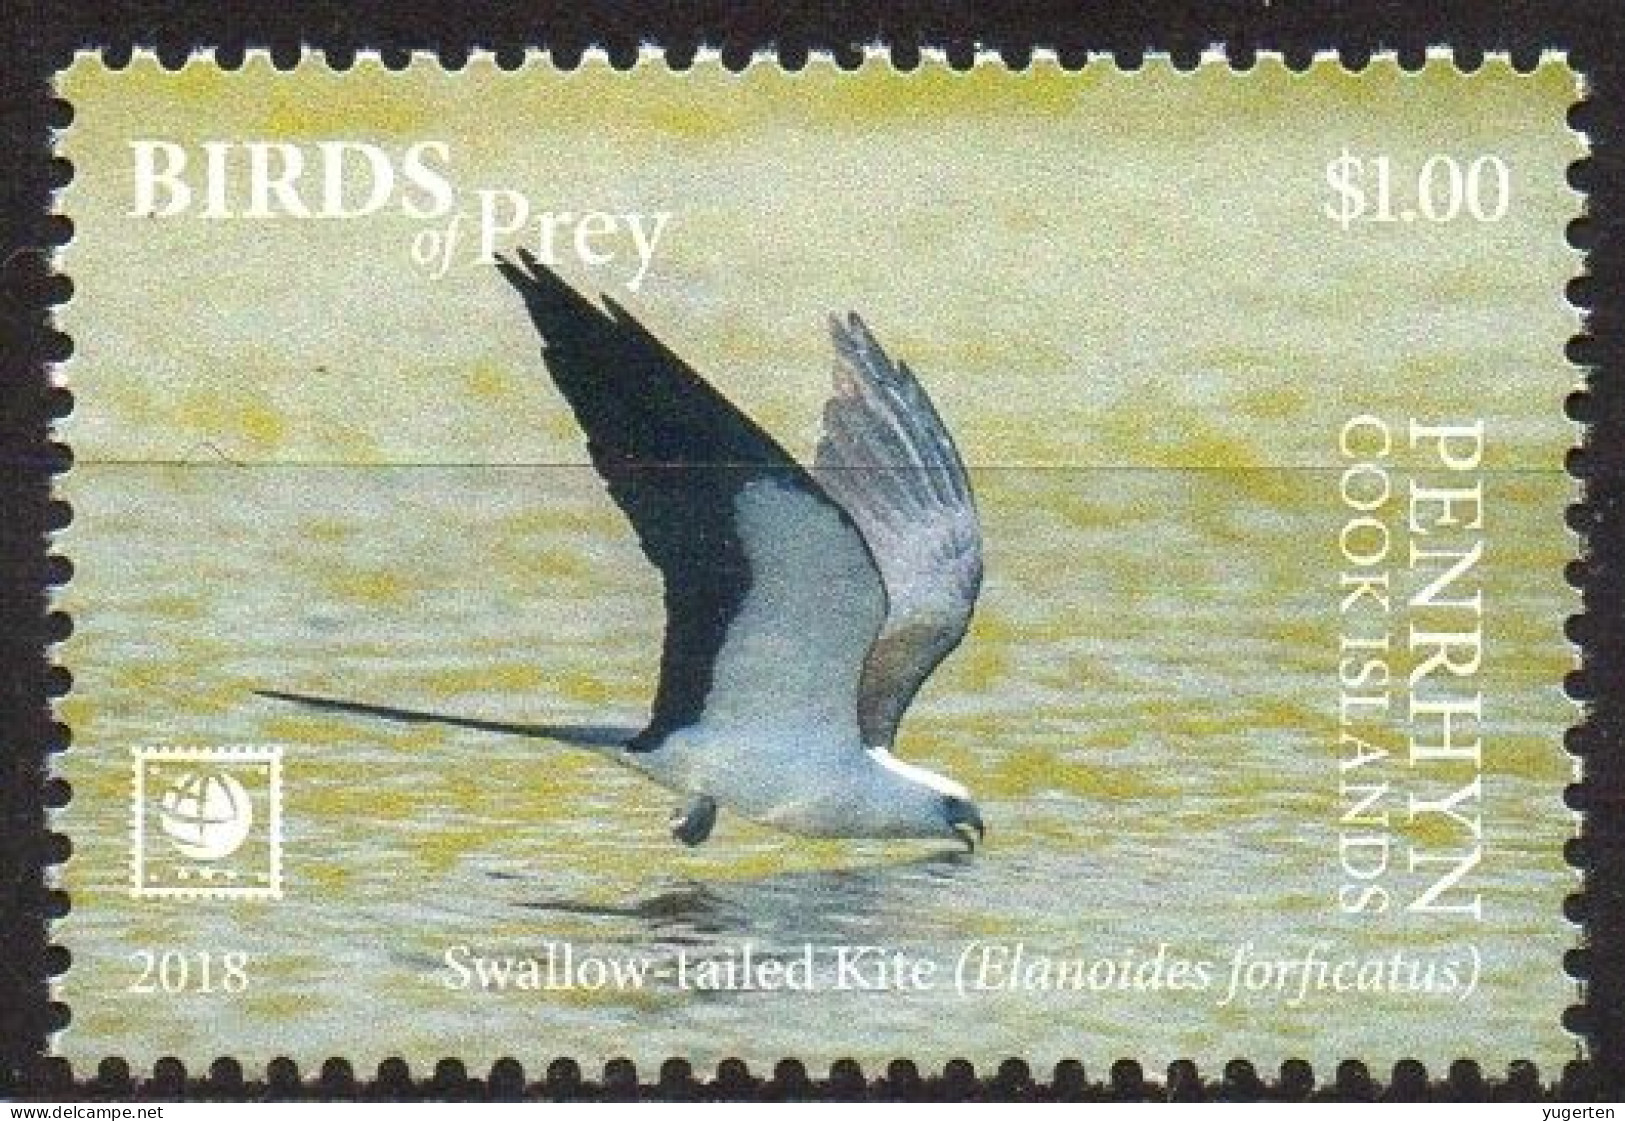 PENRHYN - 1v - MNH -  Swallow-tailed Kite - Eagle Eagles Aquila Aigle Aigles Adler - Birds - Vögel - Aguilas Aquile - Eagles & Birds Of Prey